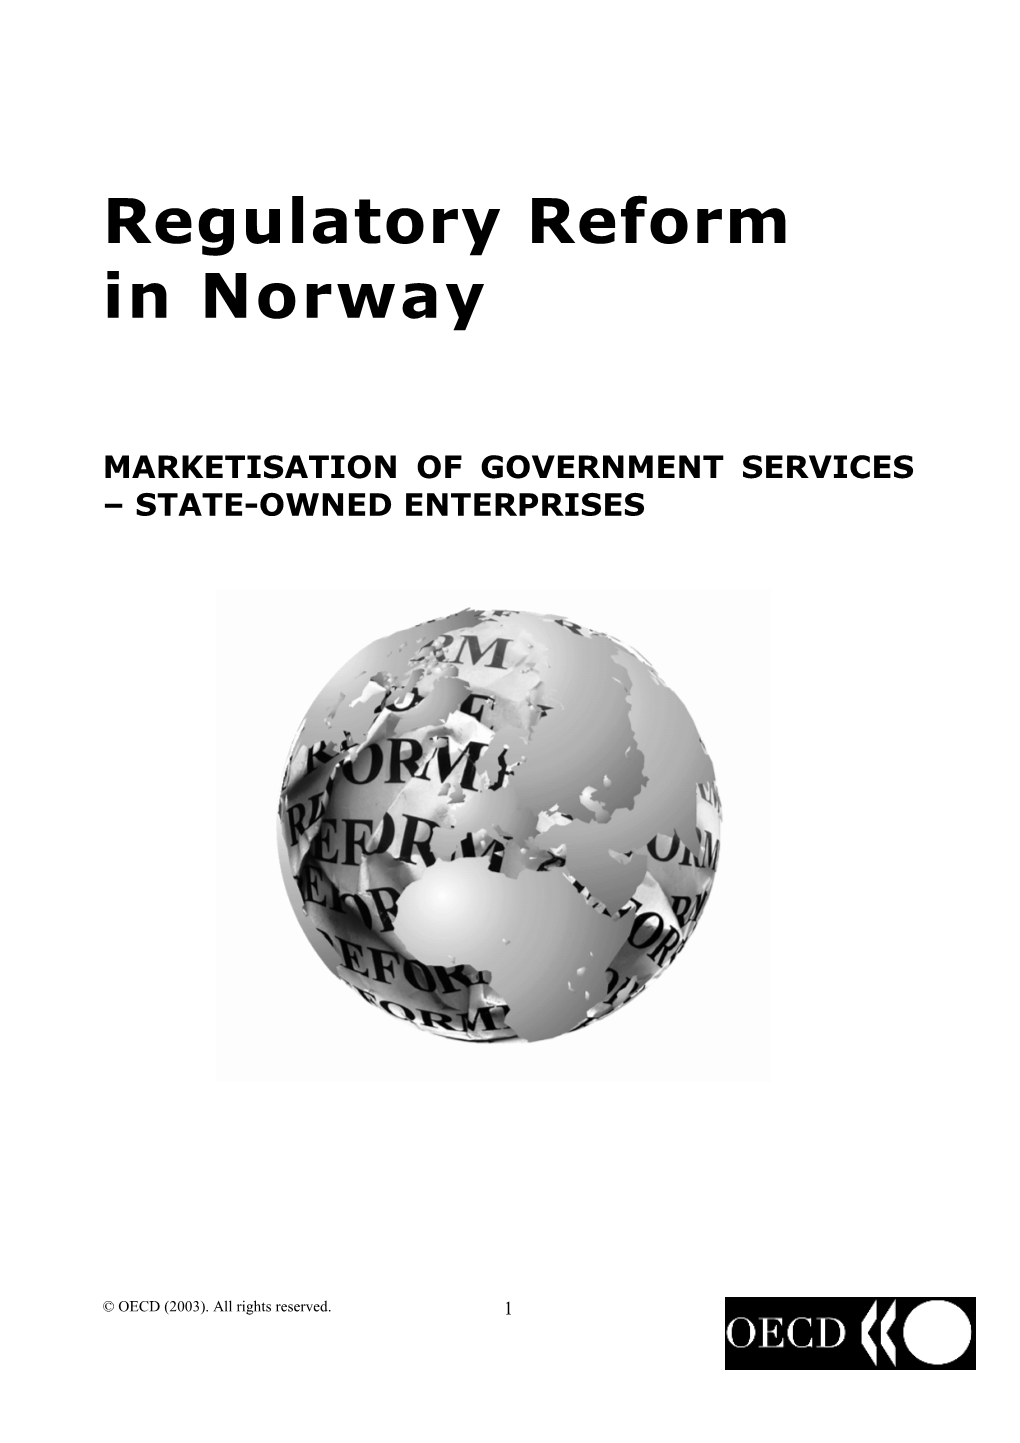 Regulatory Reform in Norway